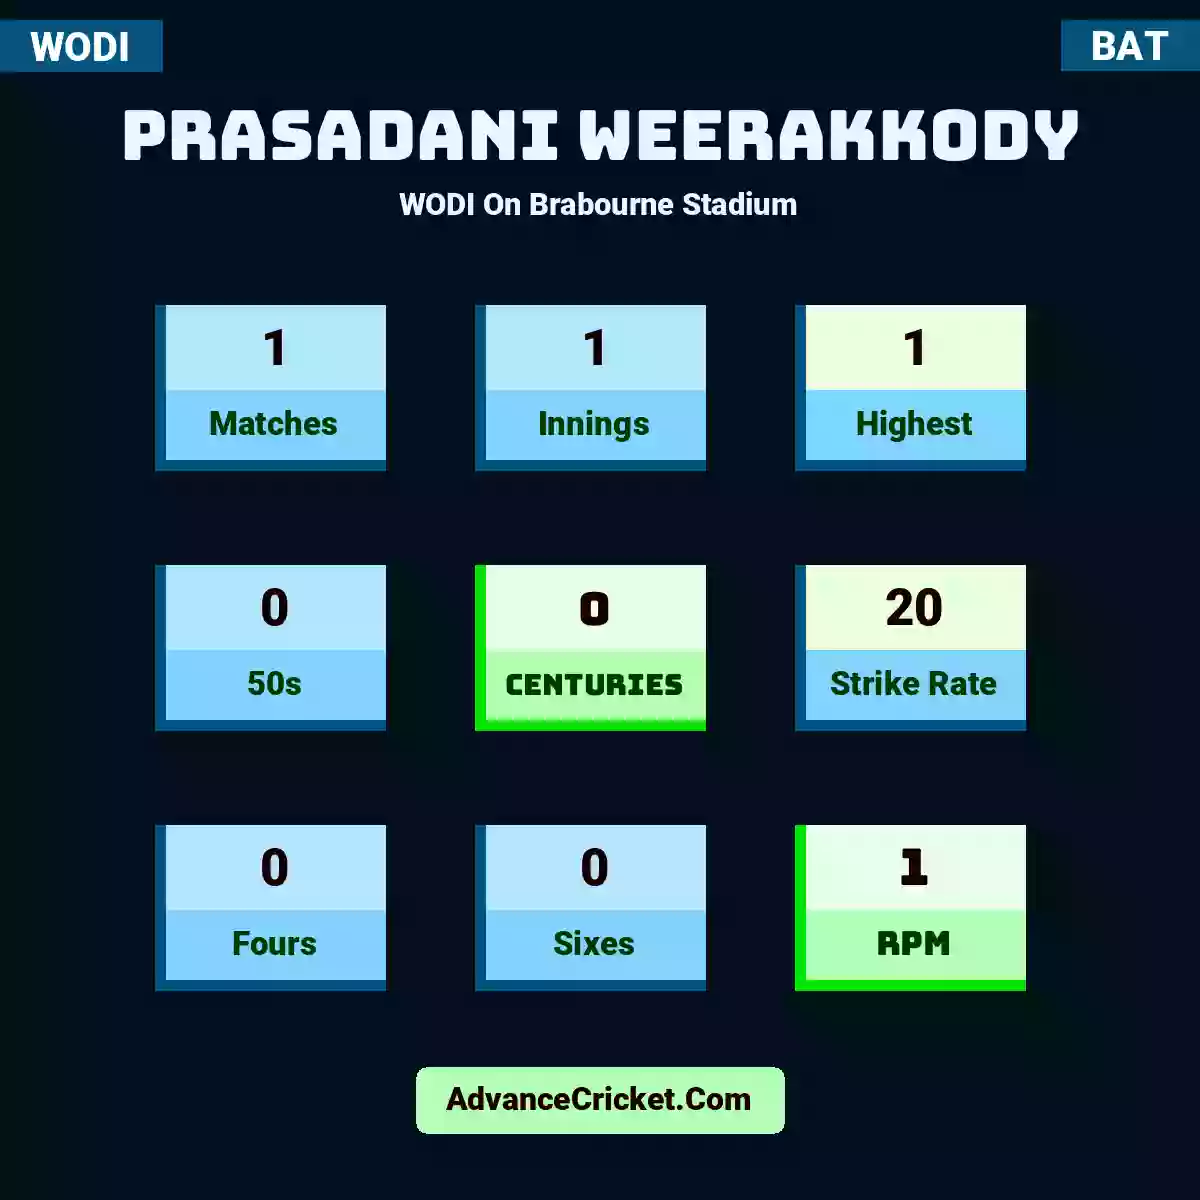 Prasadani Weerakkody WODI  On Brabourne Stadium, Prasadani Weerakkody played 1 matches, scored 1 runs as highest, 0 half-centuries, and 0 centuries, with a strike rate of 20. P.Weerakkody hit 0 fours and 0 sixes, with an RPM of 1.